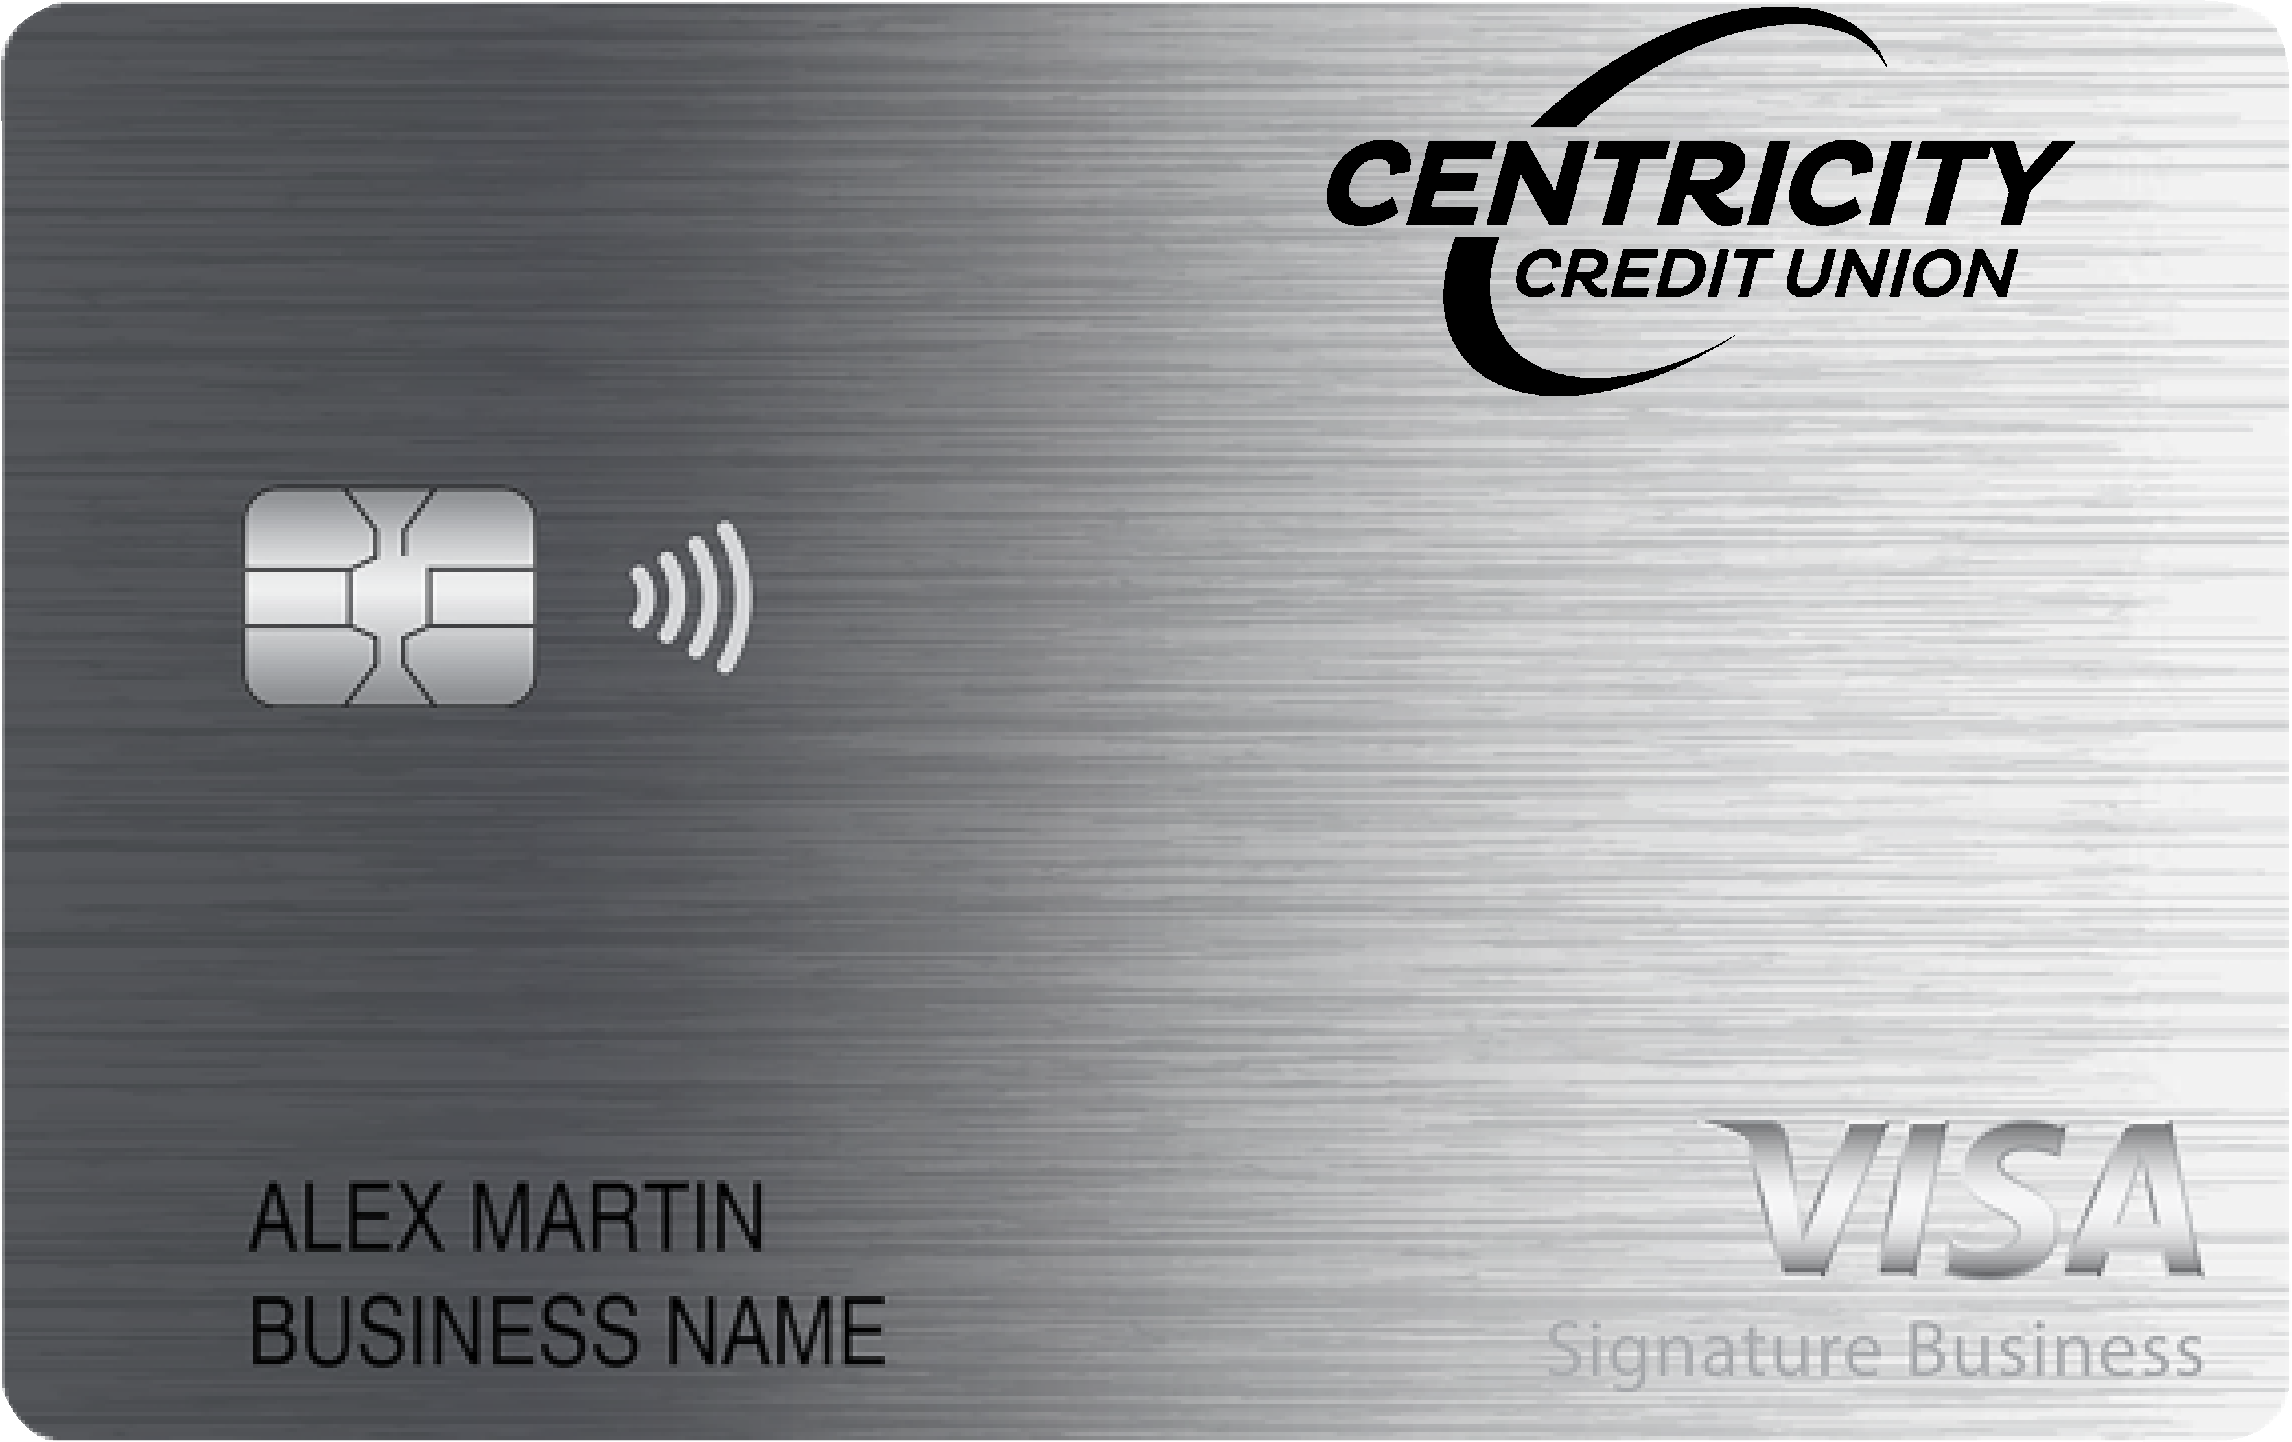 Centricity Credit Union Smart Business Rewards Card